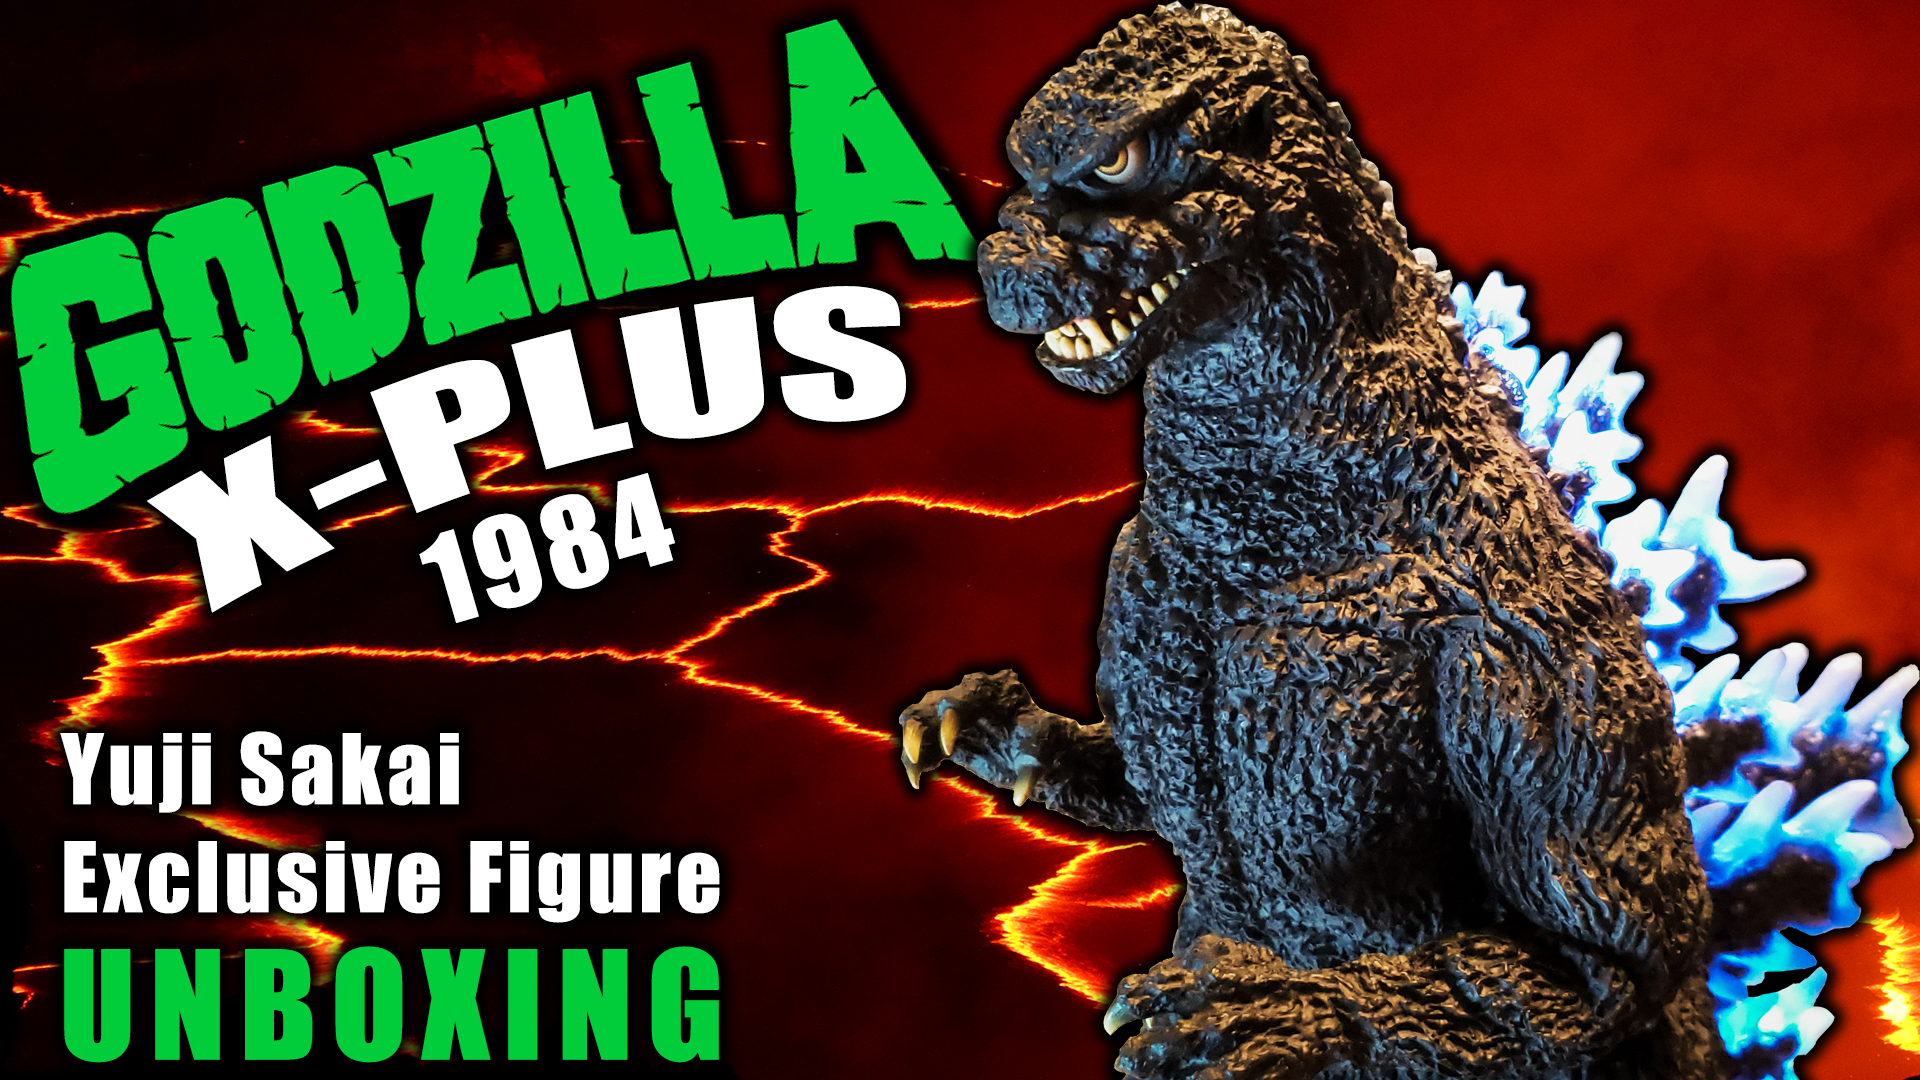 Godzilla 1984 X-Plus Ric Exclusive Figure Unboxing